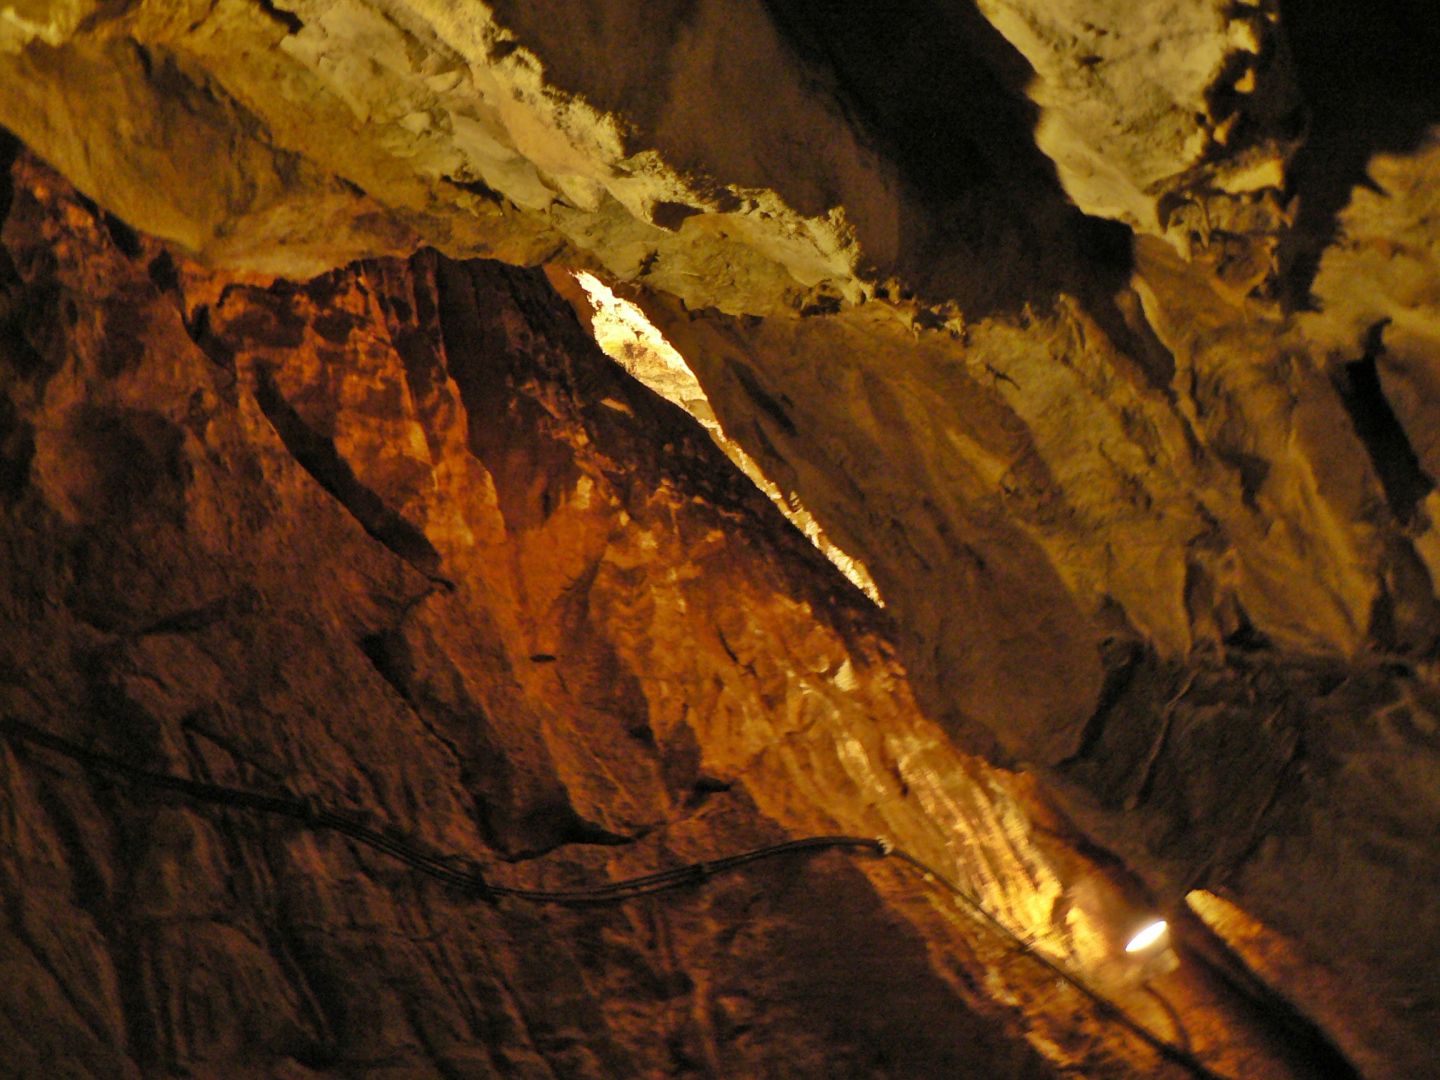 Jaskinia Mroźna